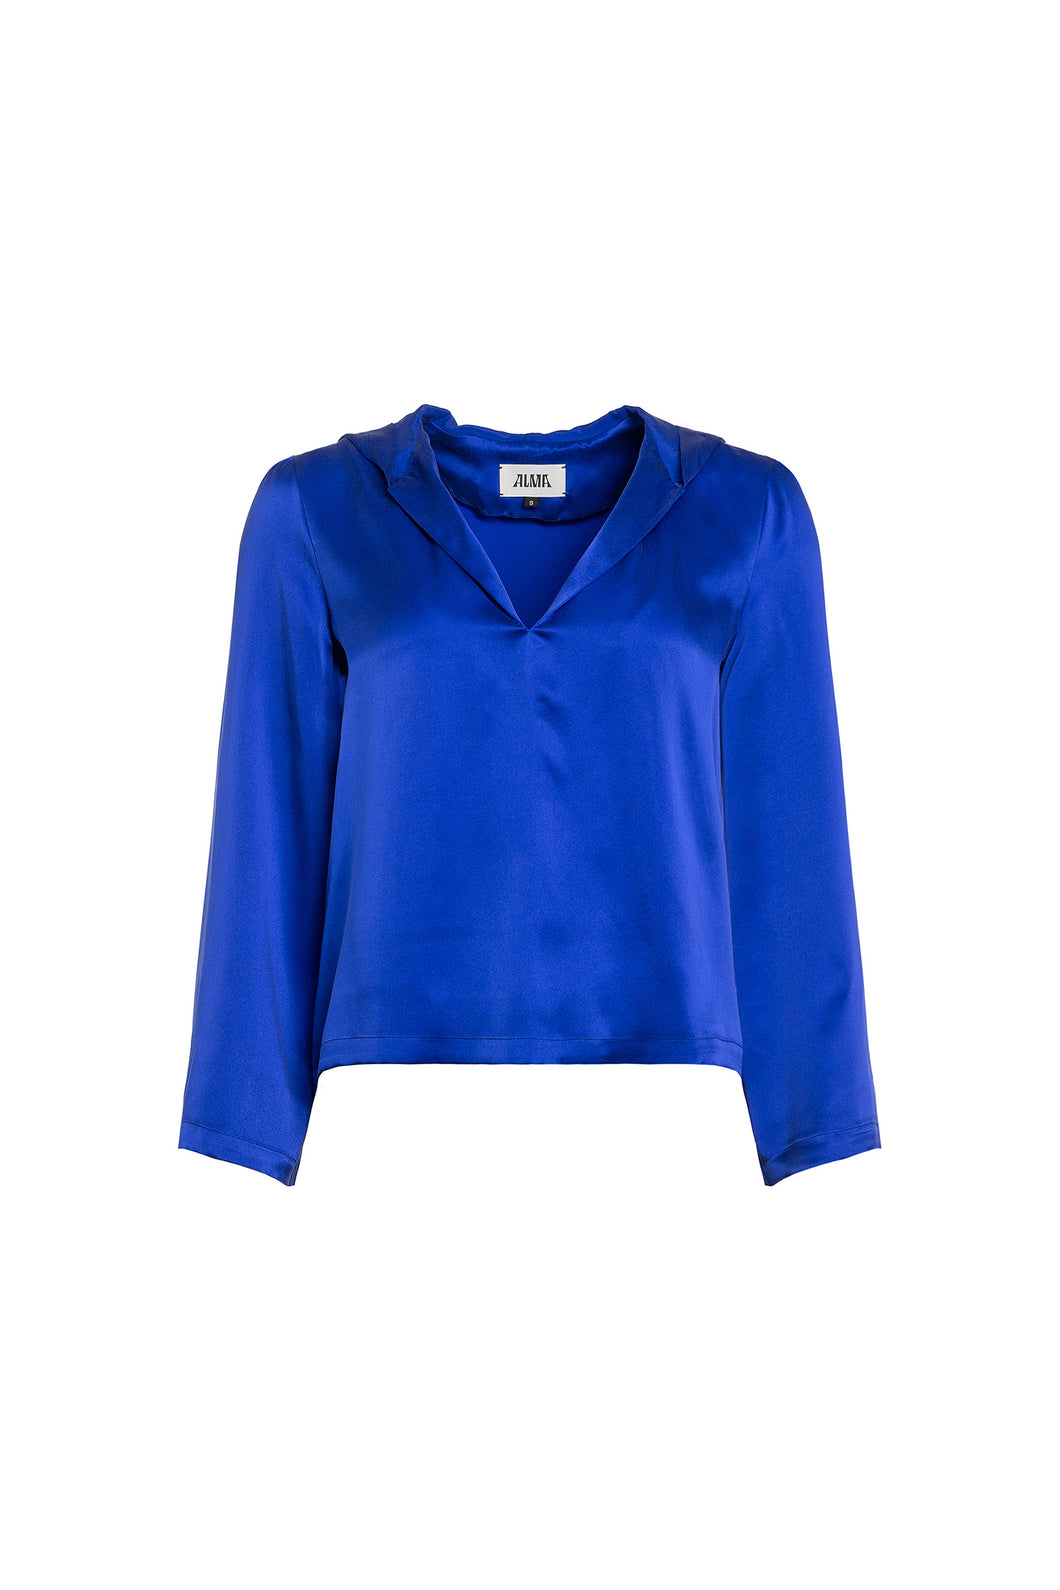 Dinah silk blouse / royal blue